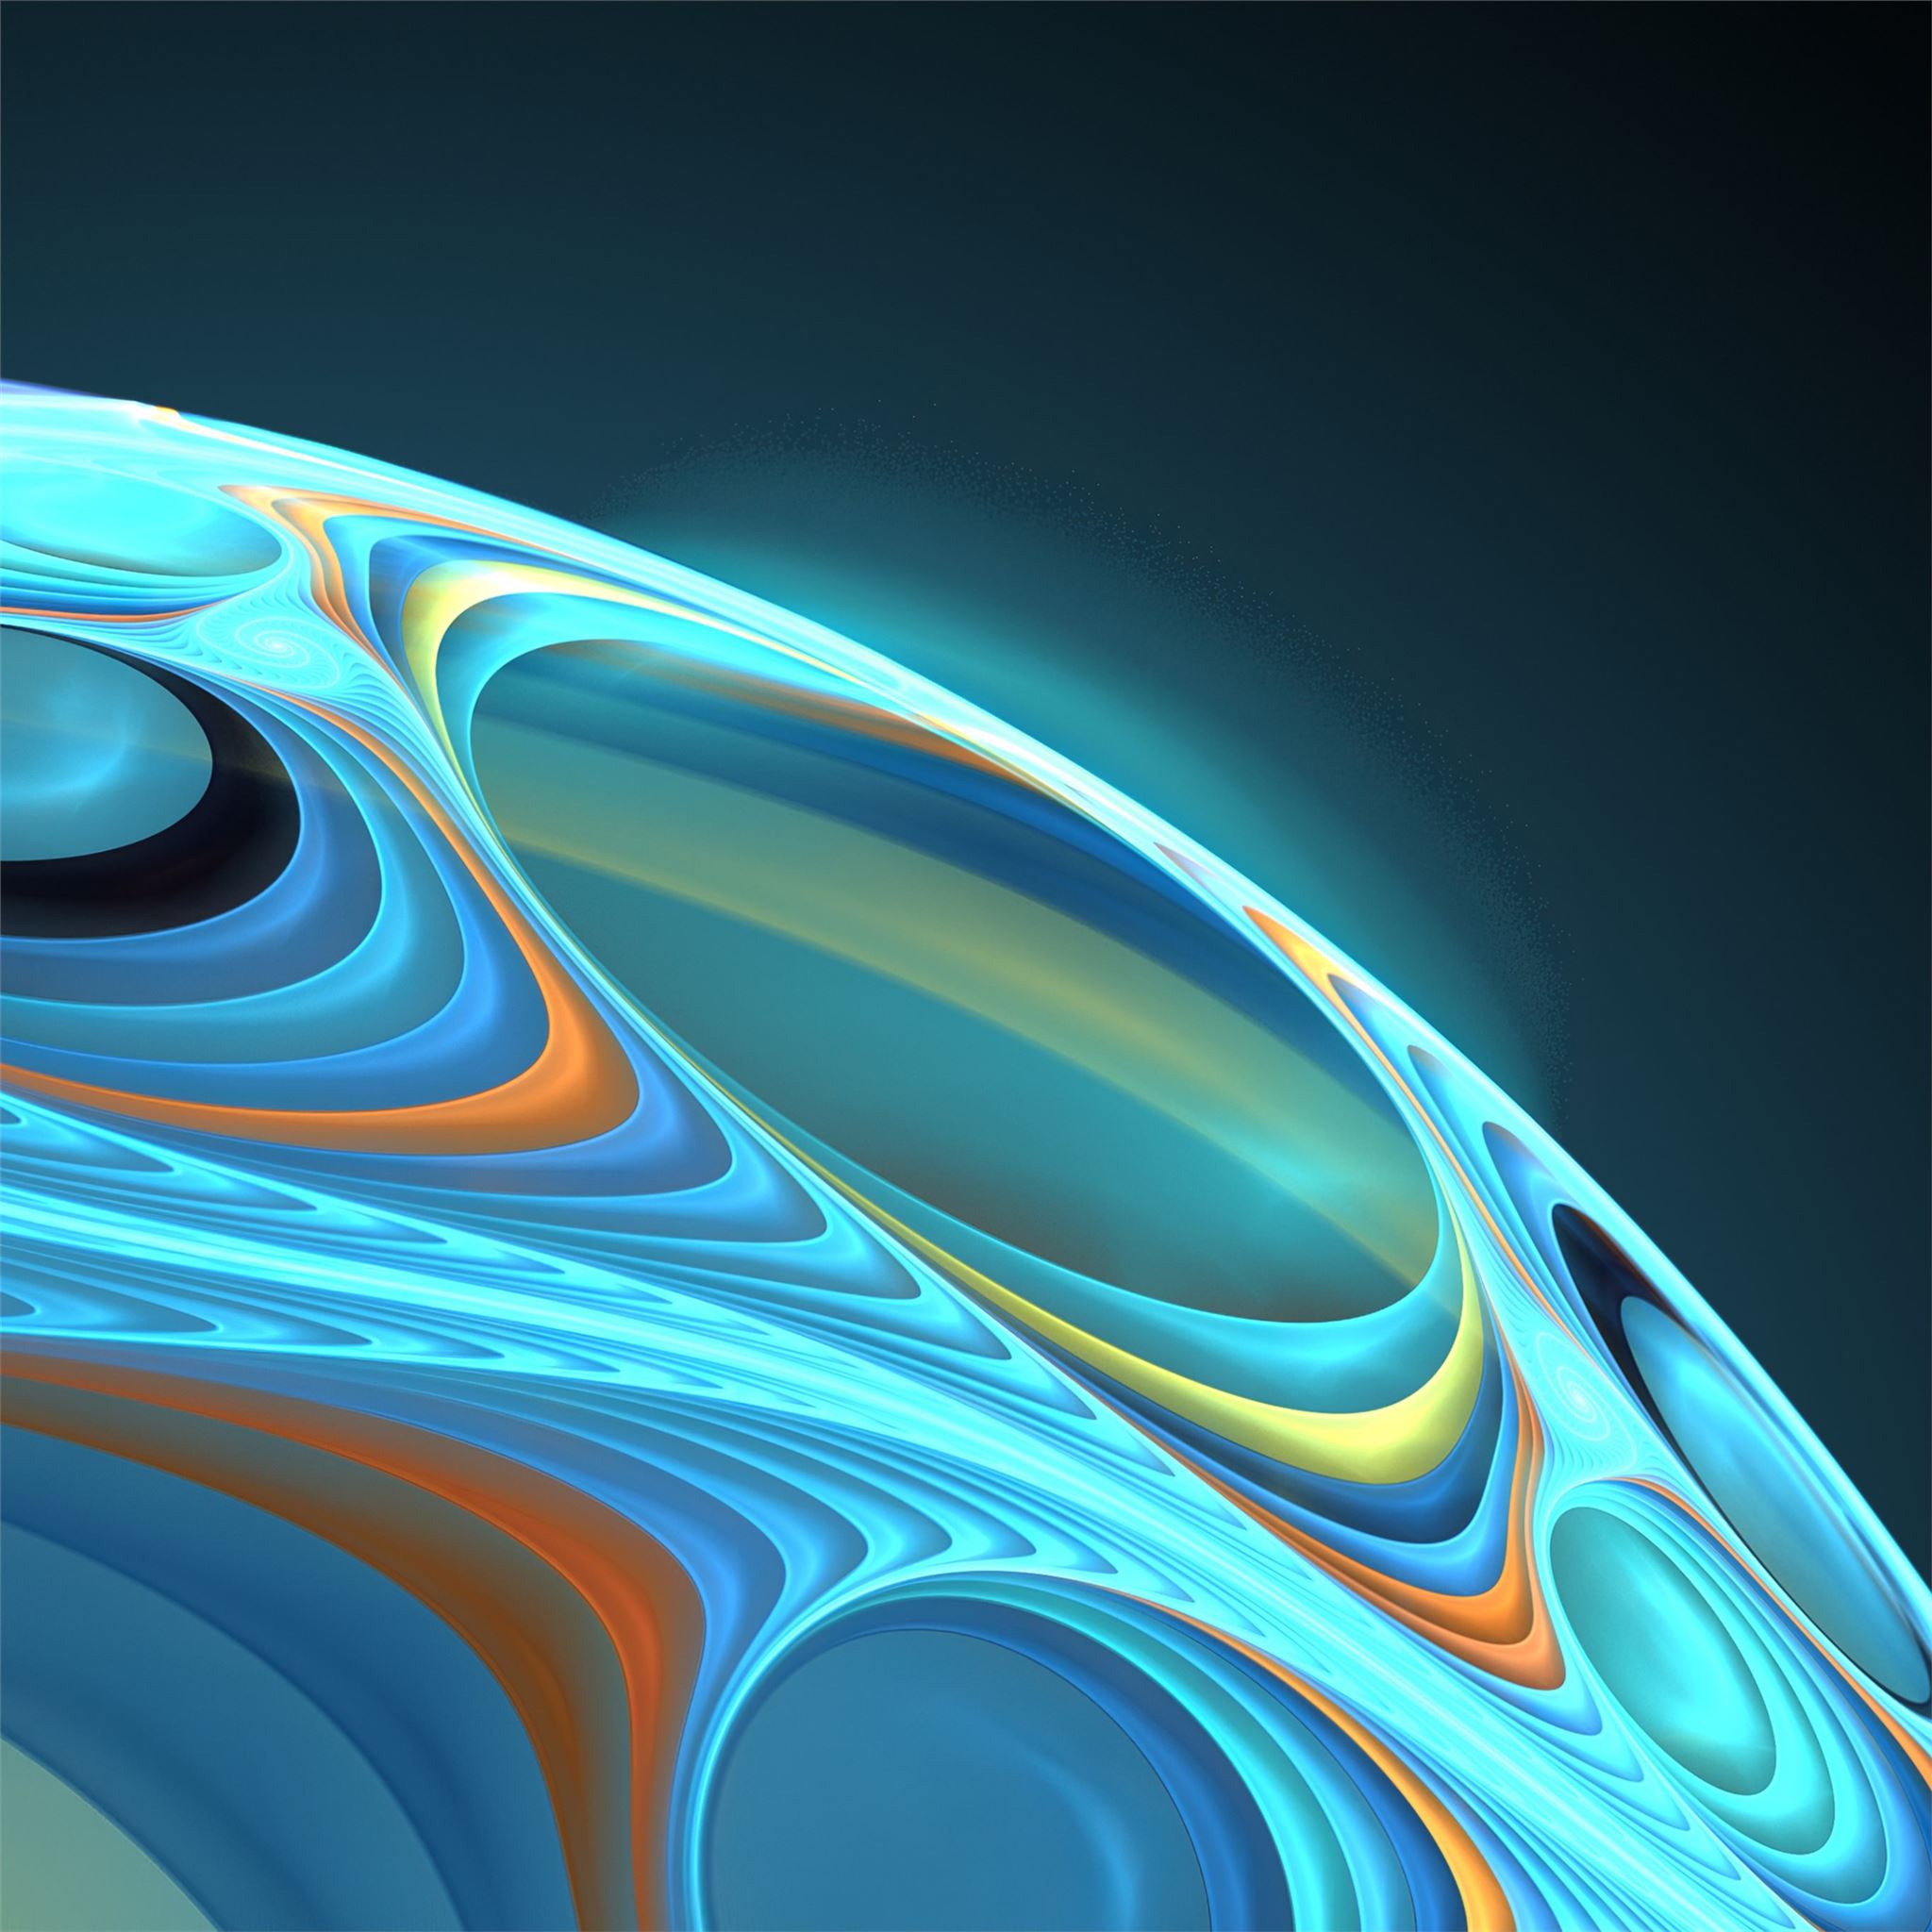 Sphere Apophysis 3d Fractal 4k Ipad Air Wallpapers Free Download